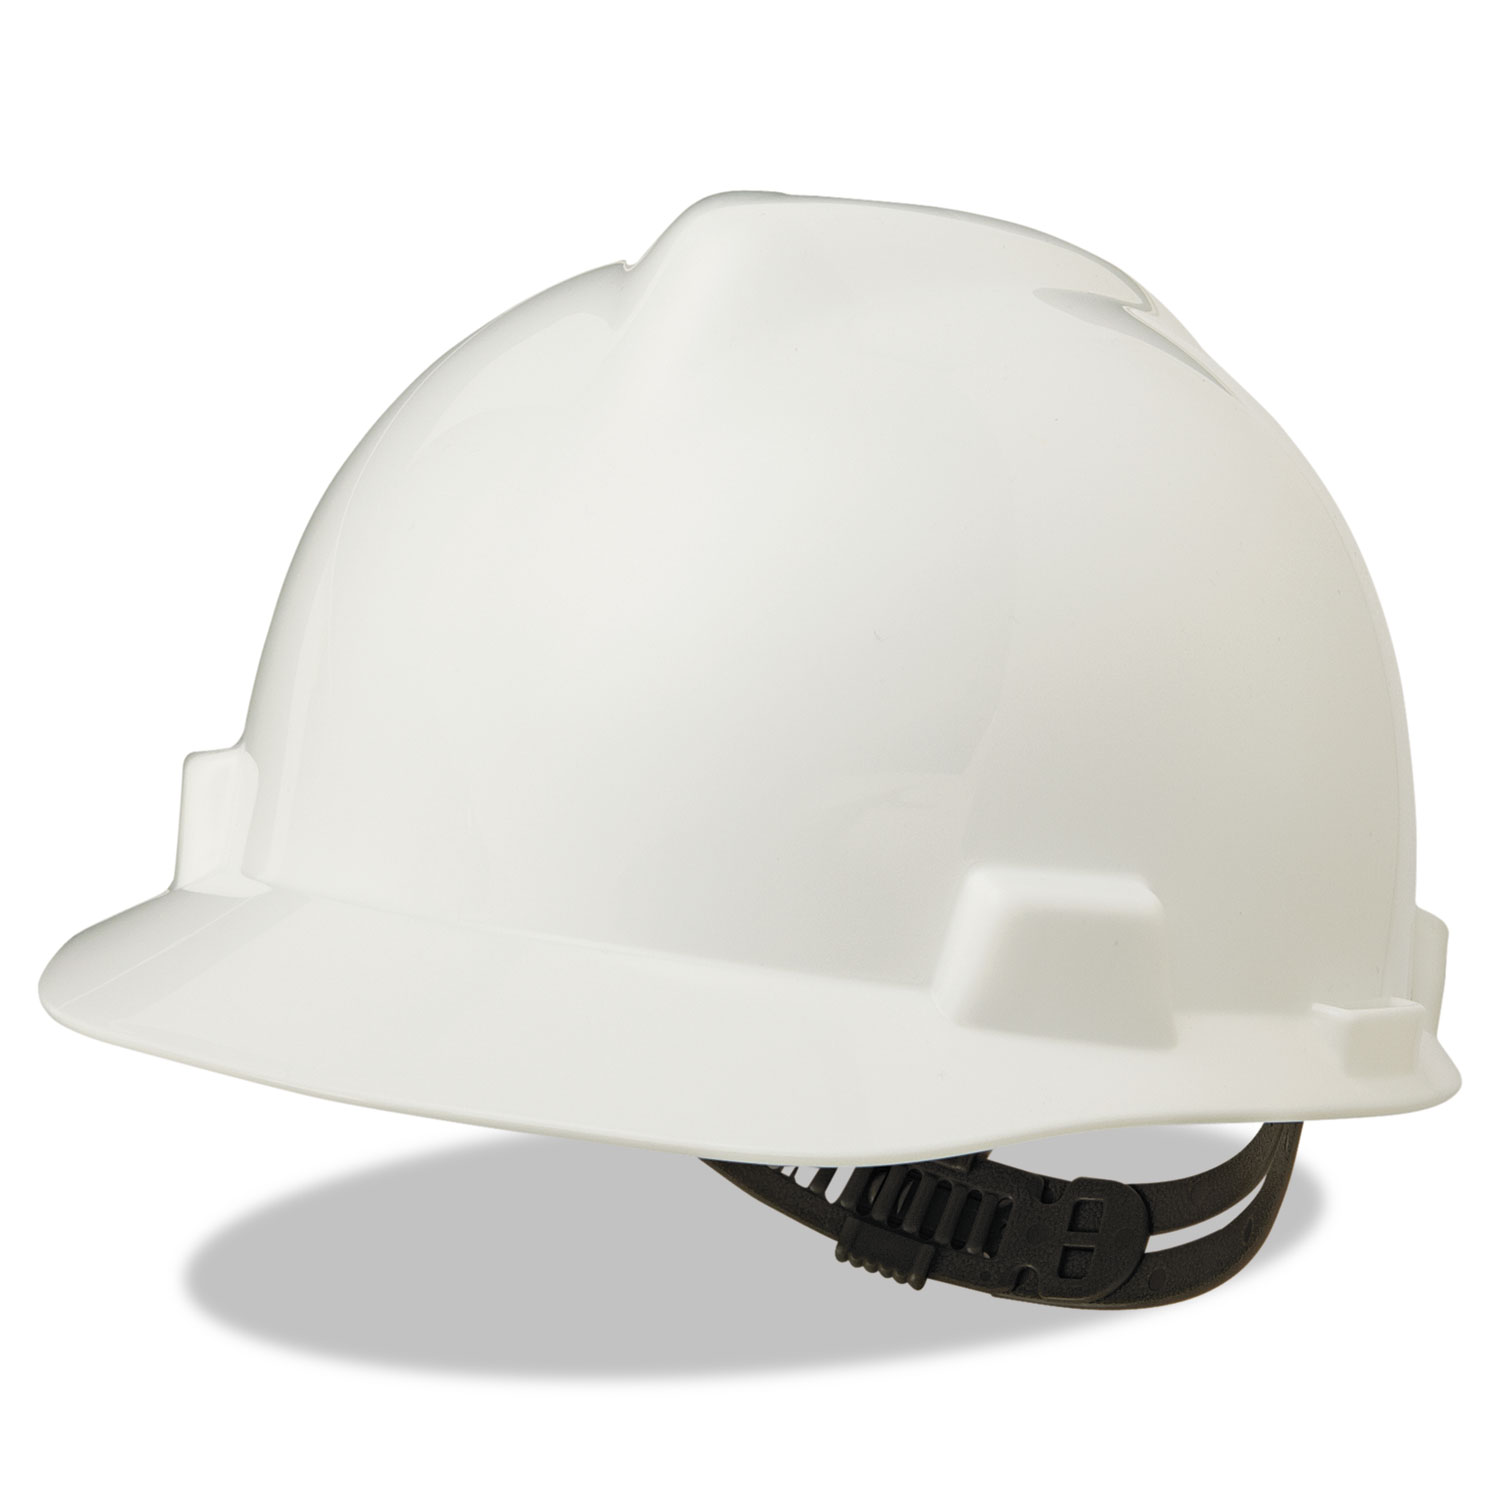 V-Gard Hard Hats, Staz-On Pin-Lock Suspension, Size 6 1/2 - 8, White